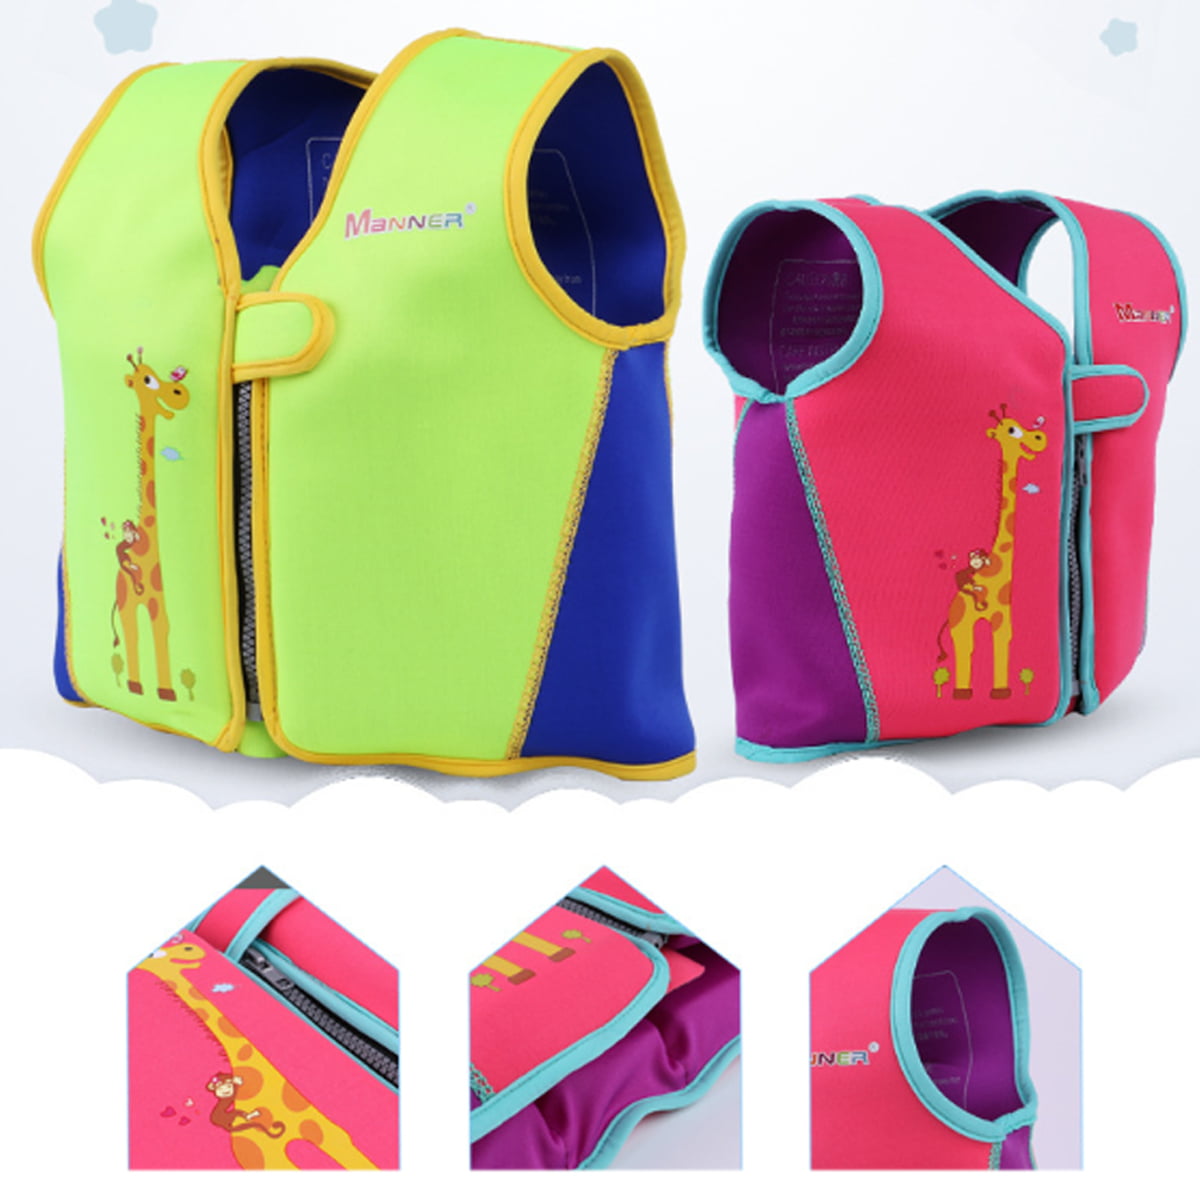 Details about   Kids Children Sports Swimming Floating Swim Aid Vest Buoyancy Safety Life Jacket 